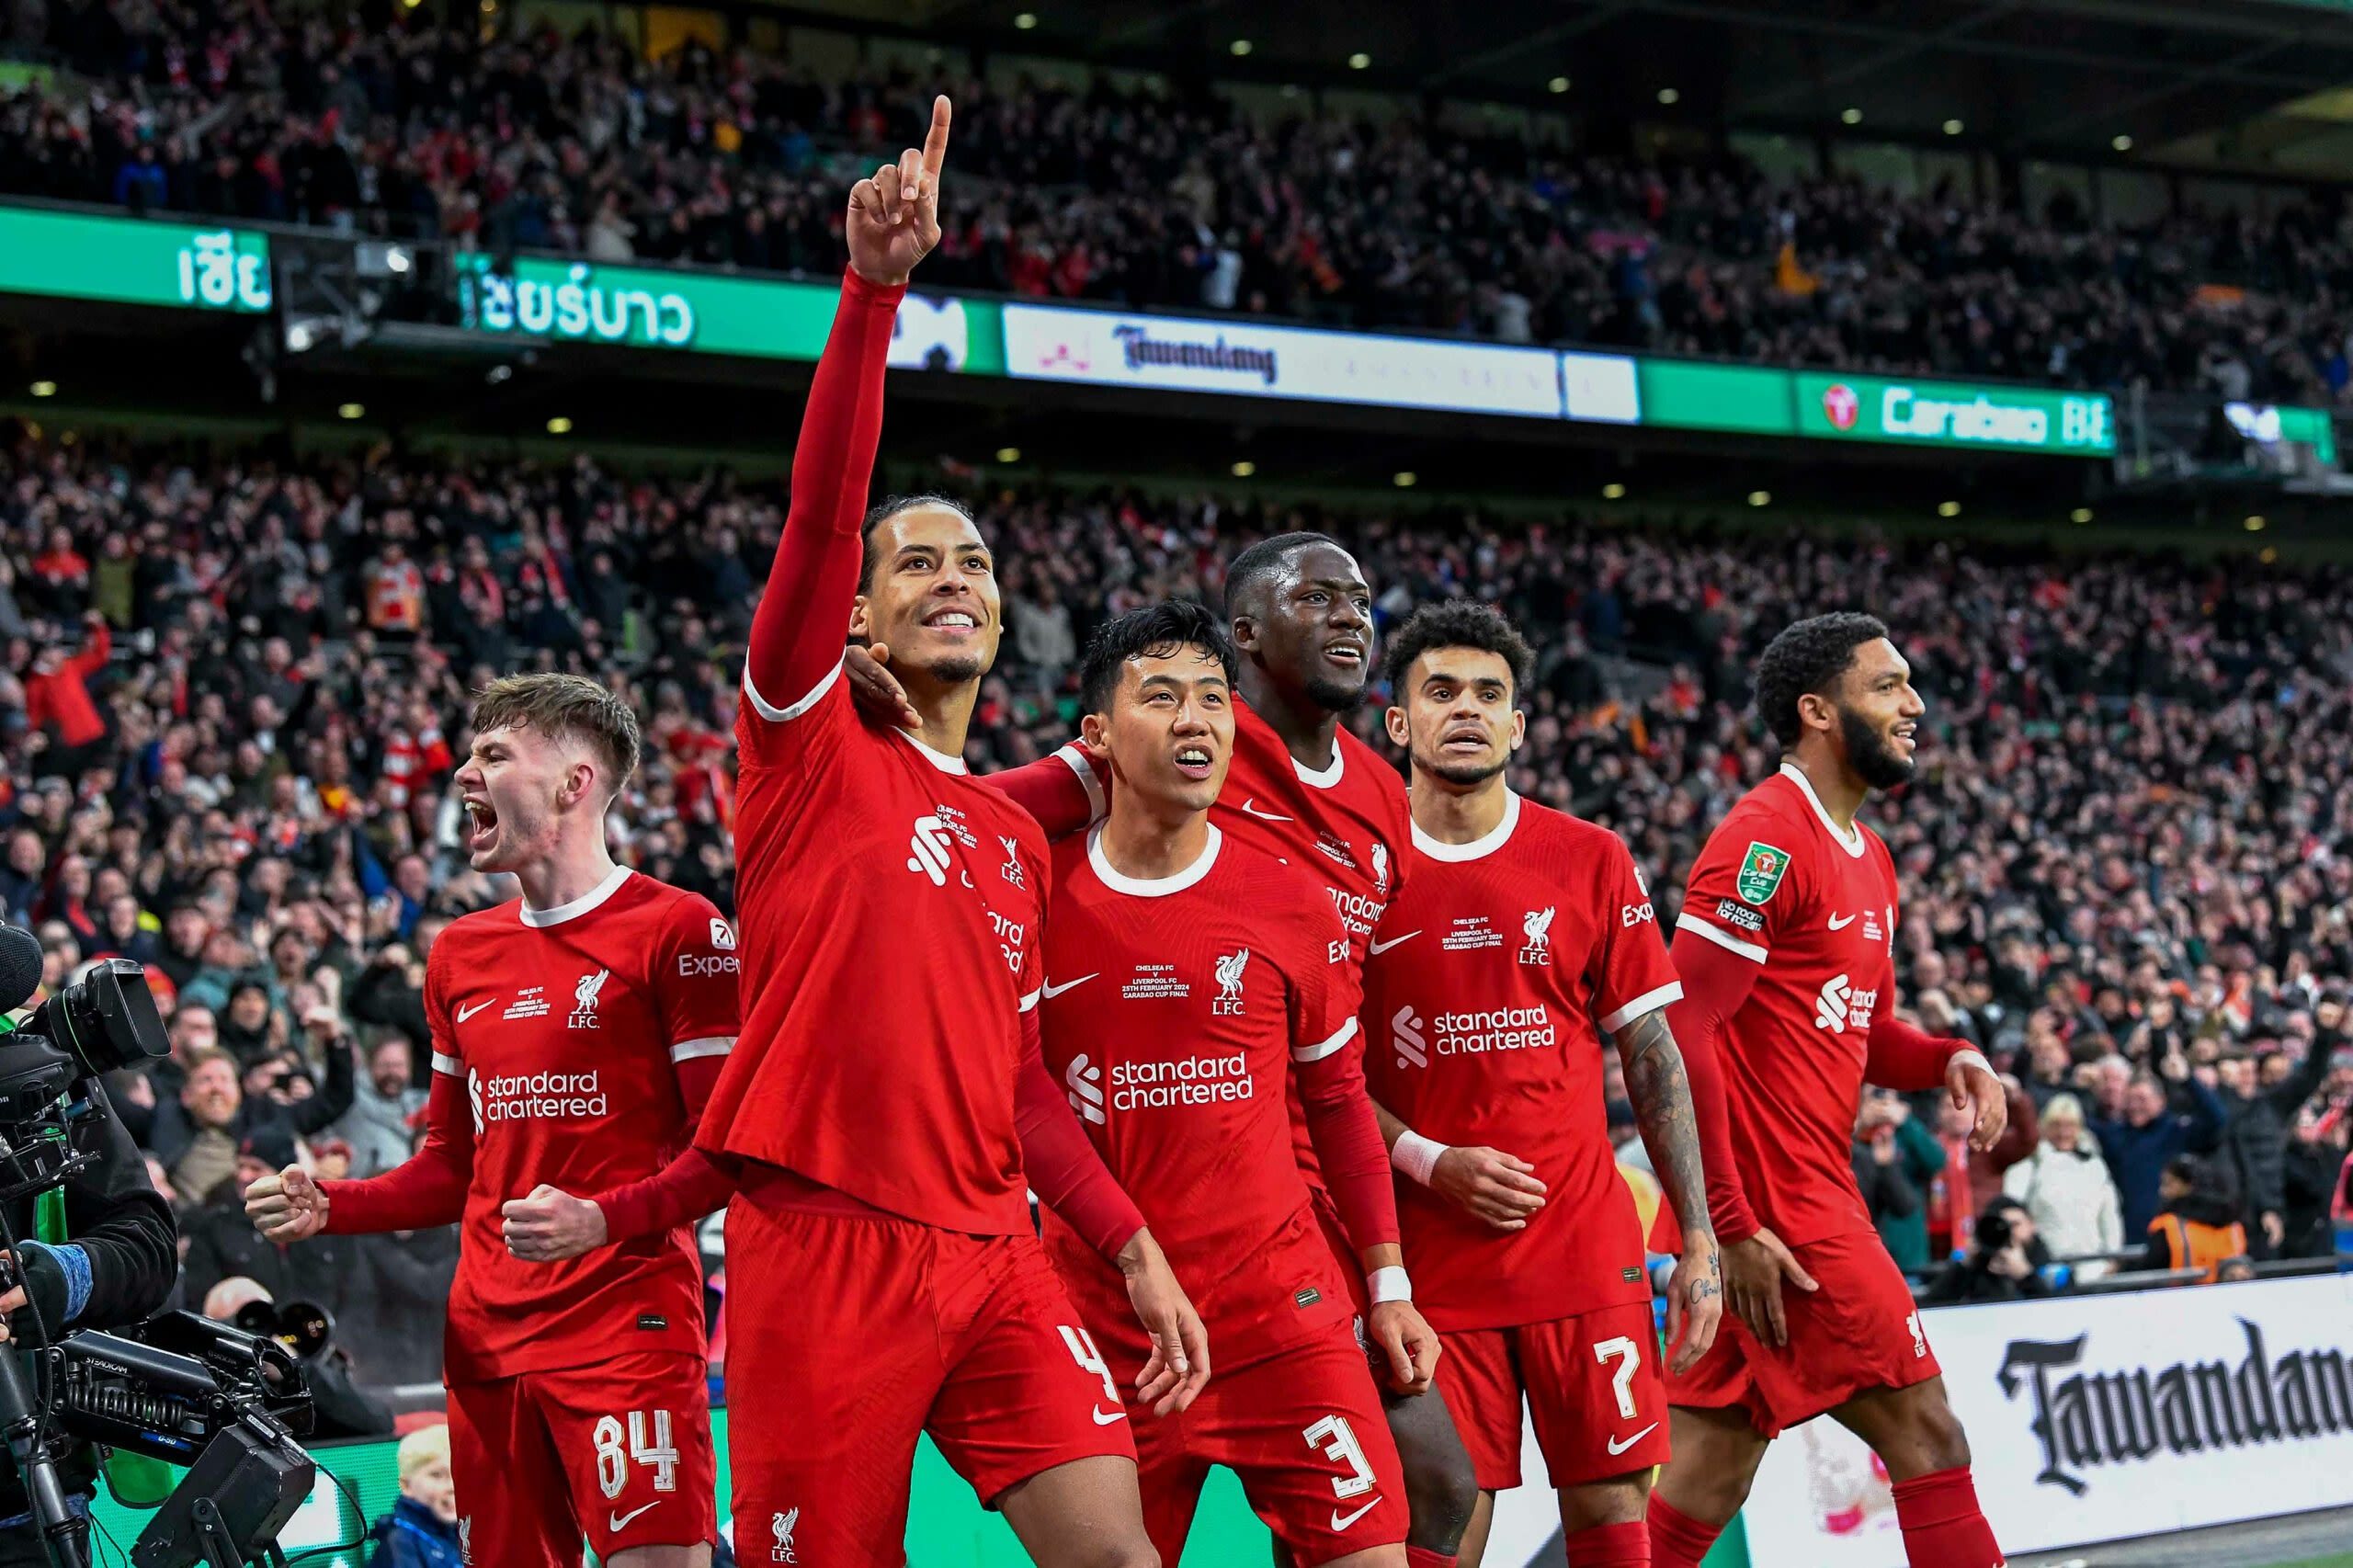 Six ‘Crucial’ Liverpool Stars Return to Pre-Season Training Ahead of Premier League Opener